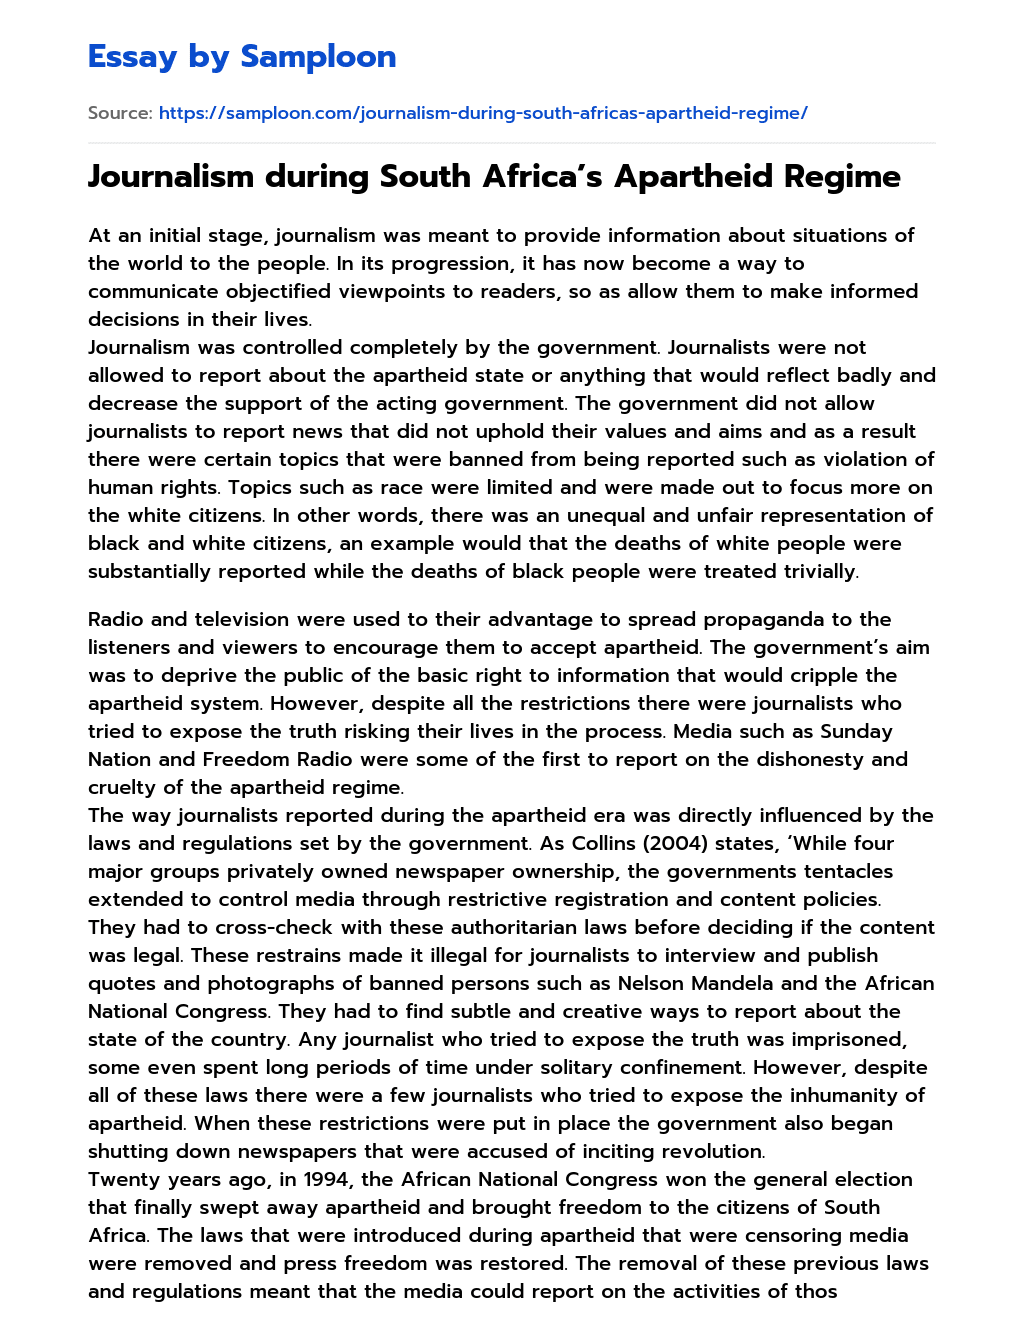 grade 9 history essay about apartheid